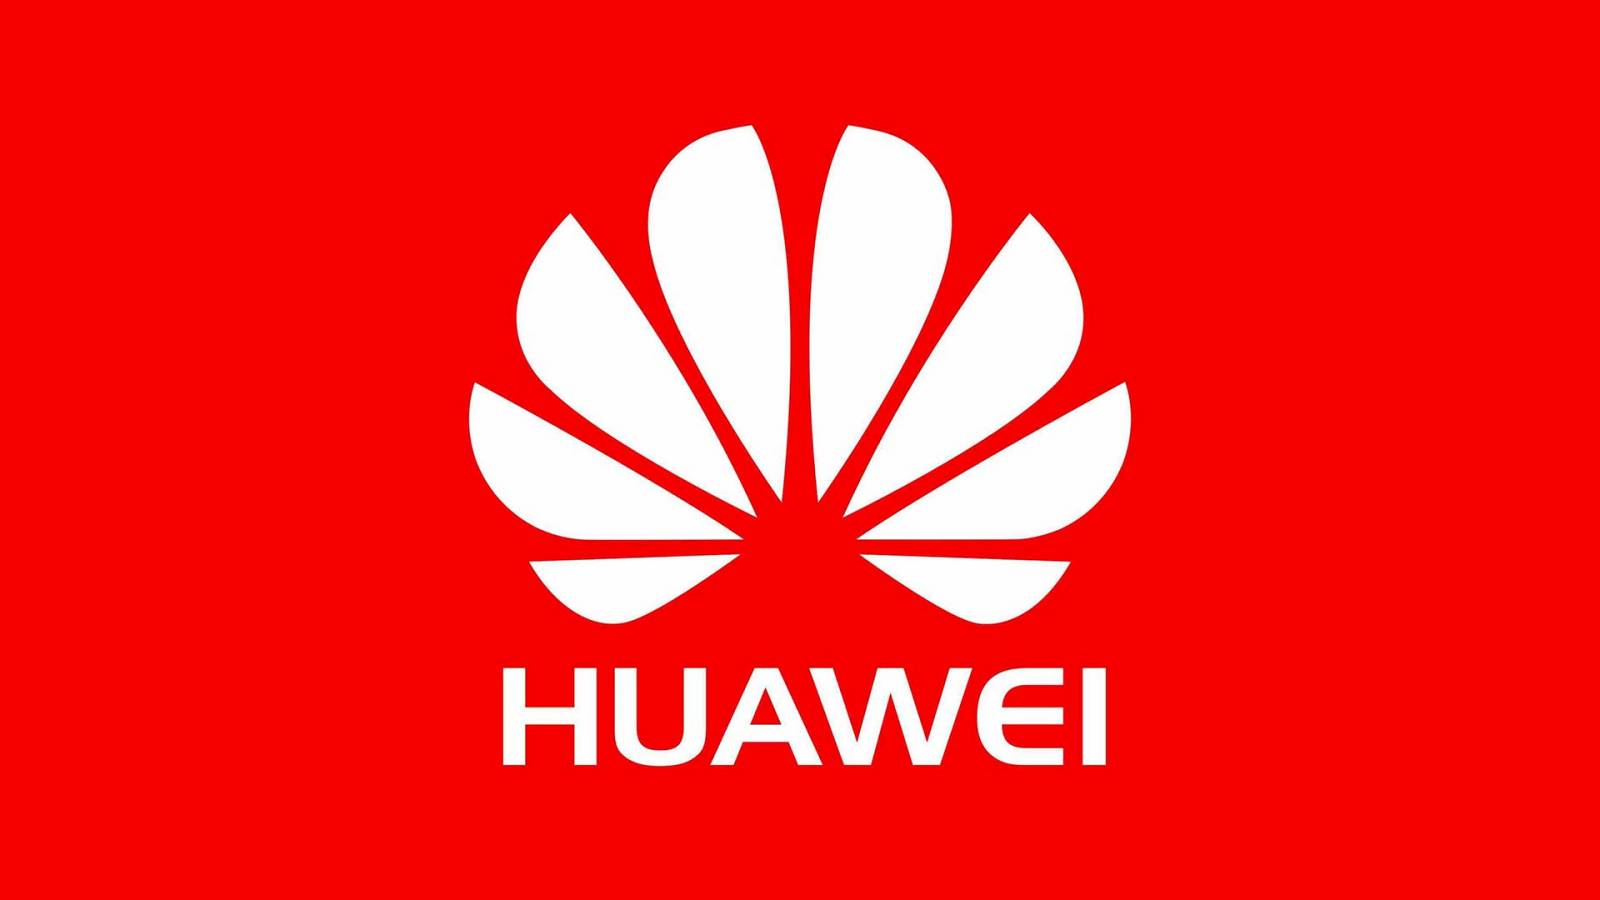 Huawei se FACE DE RUSINE in mod STUPID si Complet Inutil